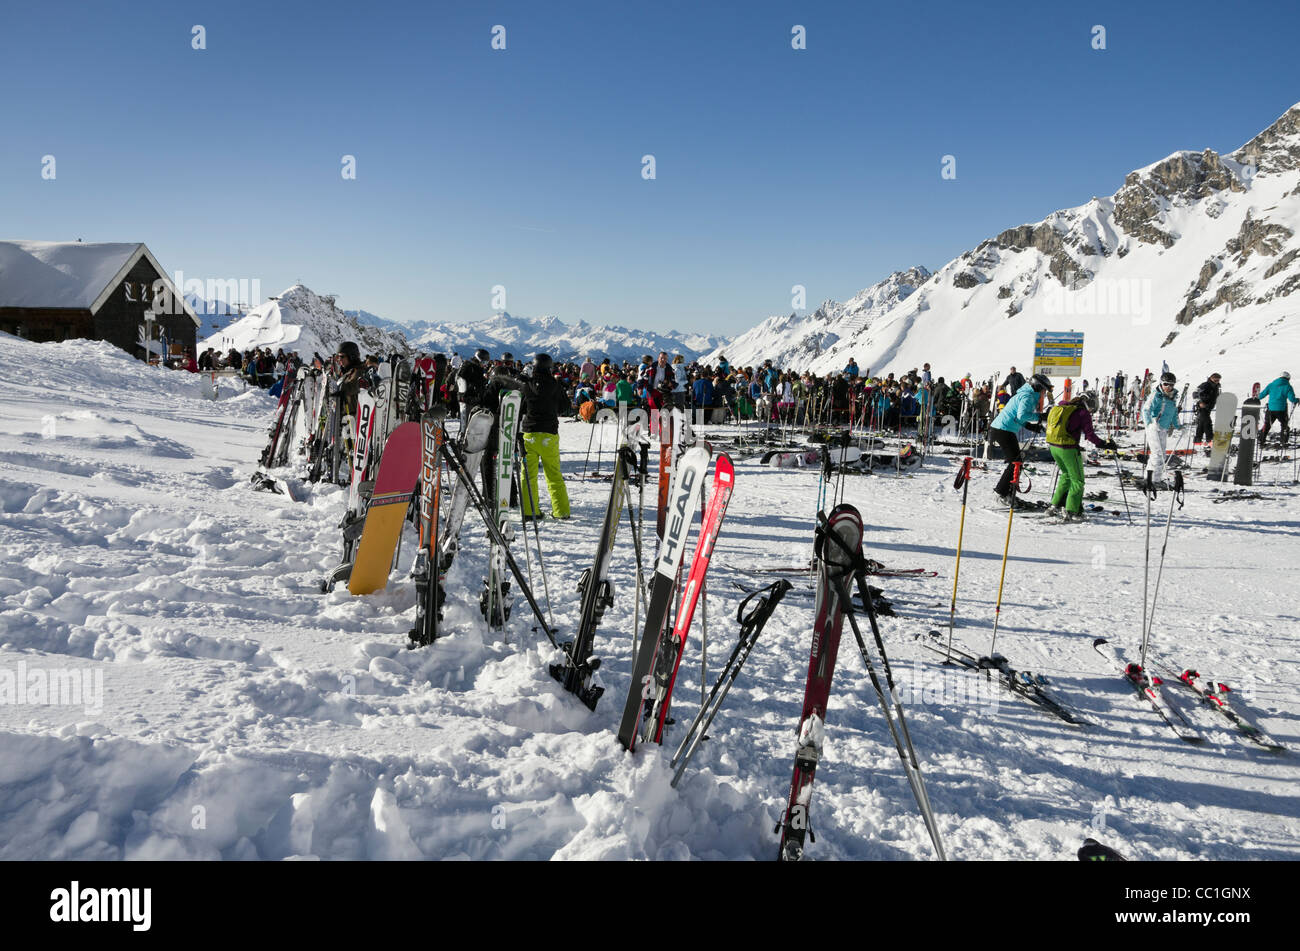 Skis in snow outside Ulmer Hutte ski restaurant busy with skiers in Austrian Alps in winter St Anton am Arlberg Tyrol Austria Stock Photo